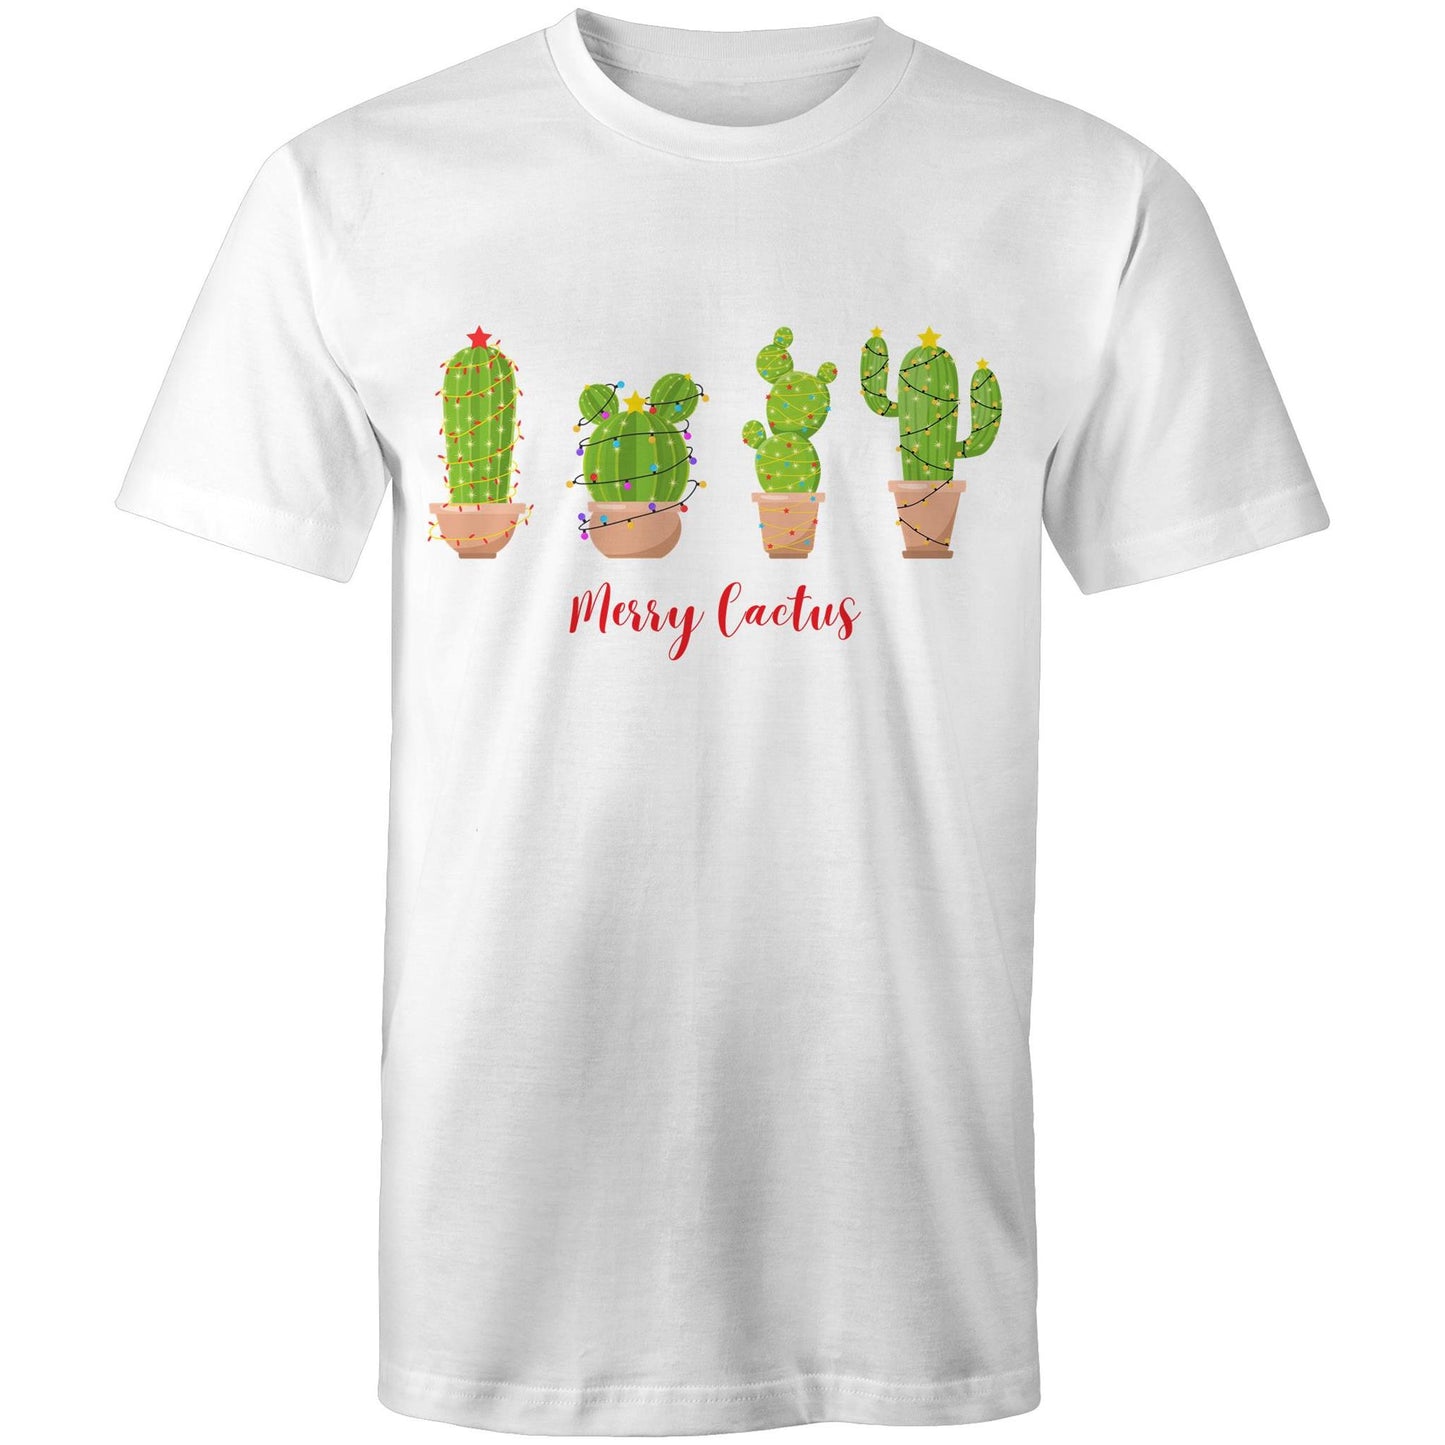 Merry Cactus - Mens T-Shirt White Christmas Mens T-shirt Merry Christmas